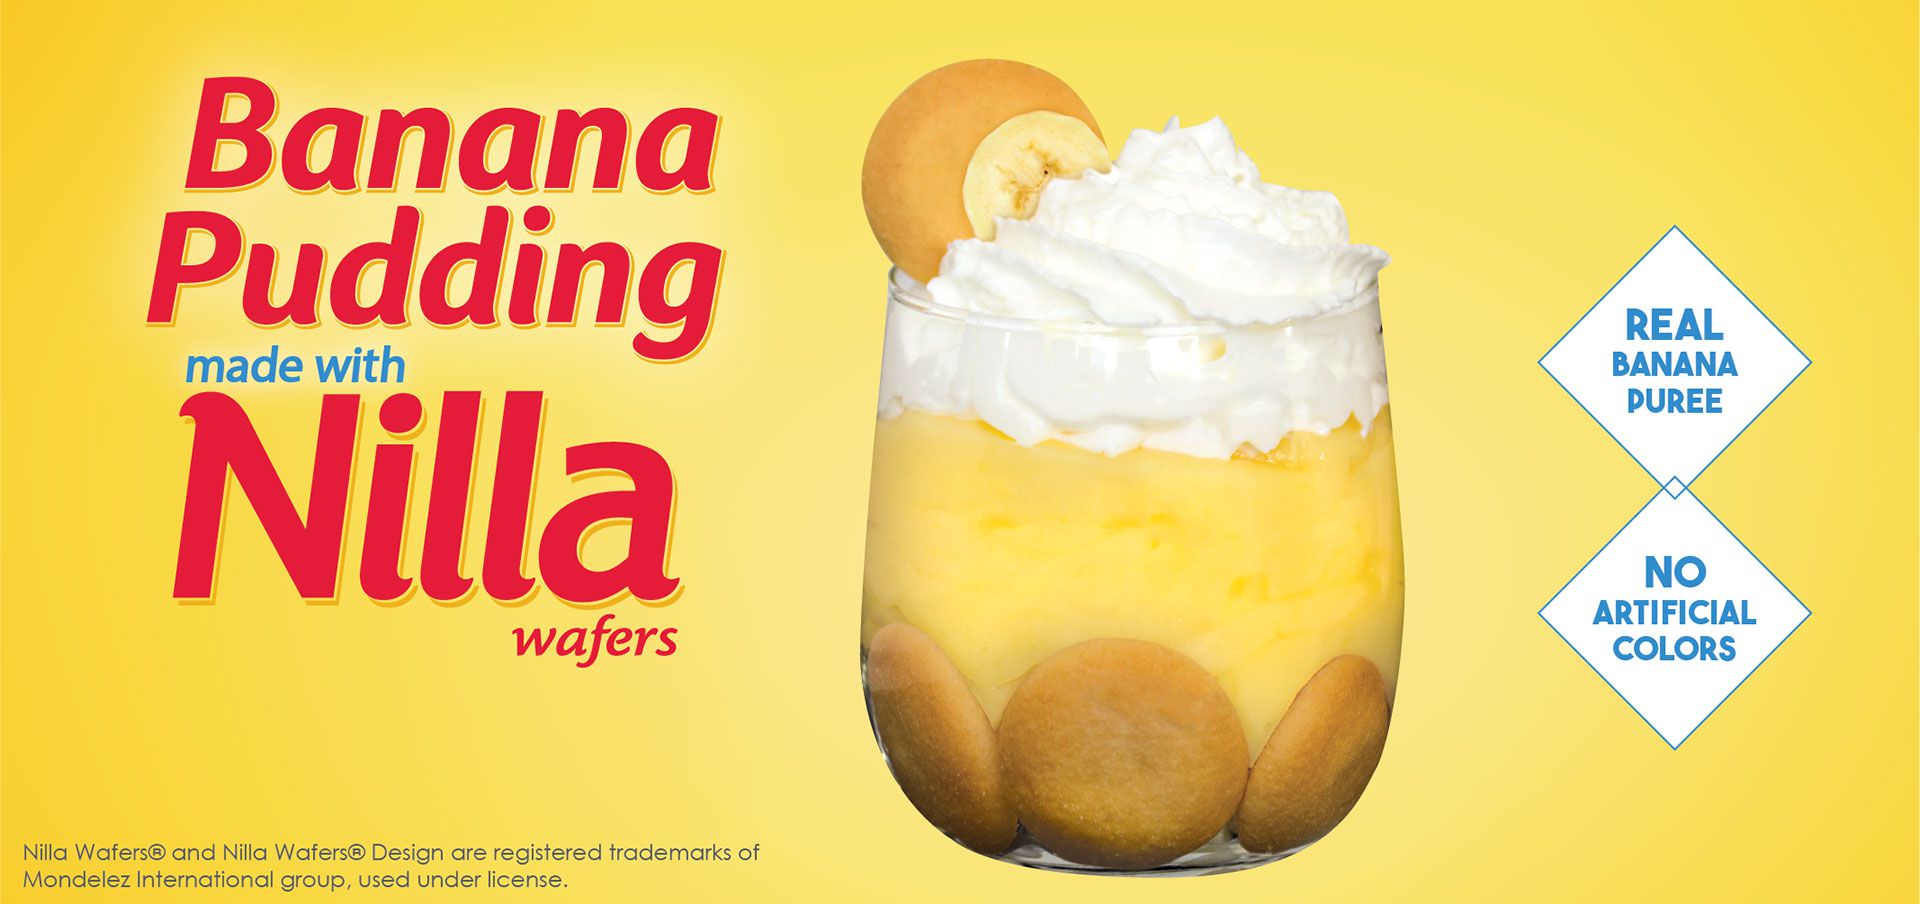 banana pudding made with nilla® wafers label image